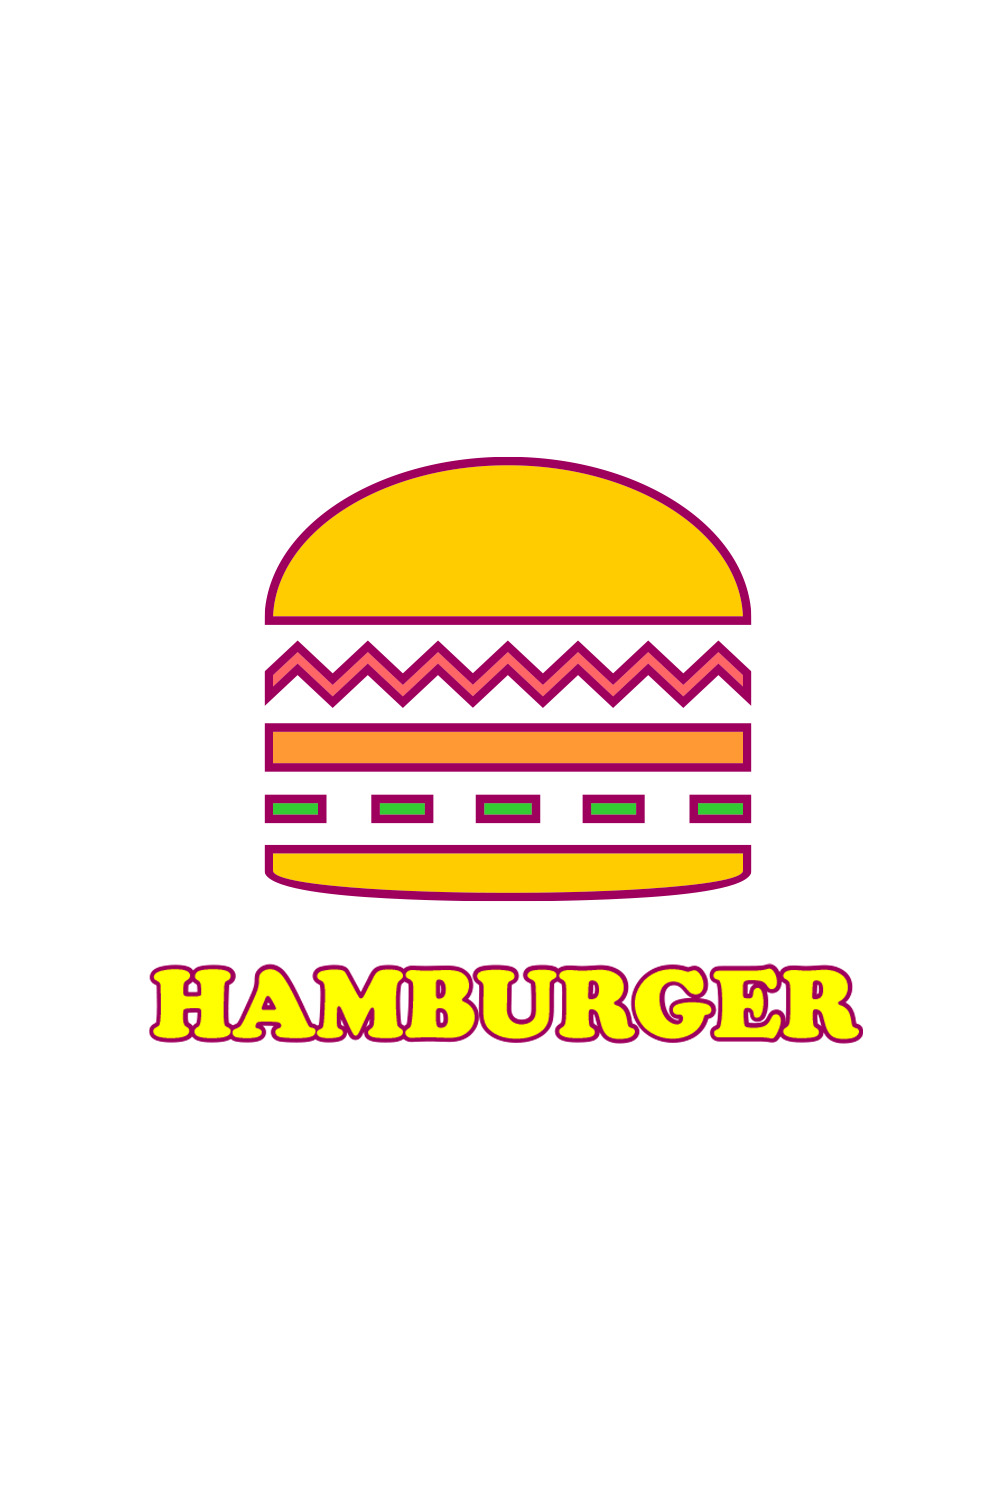 Hamburger Logo pinterest preview image.